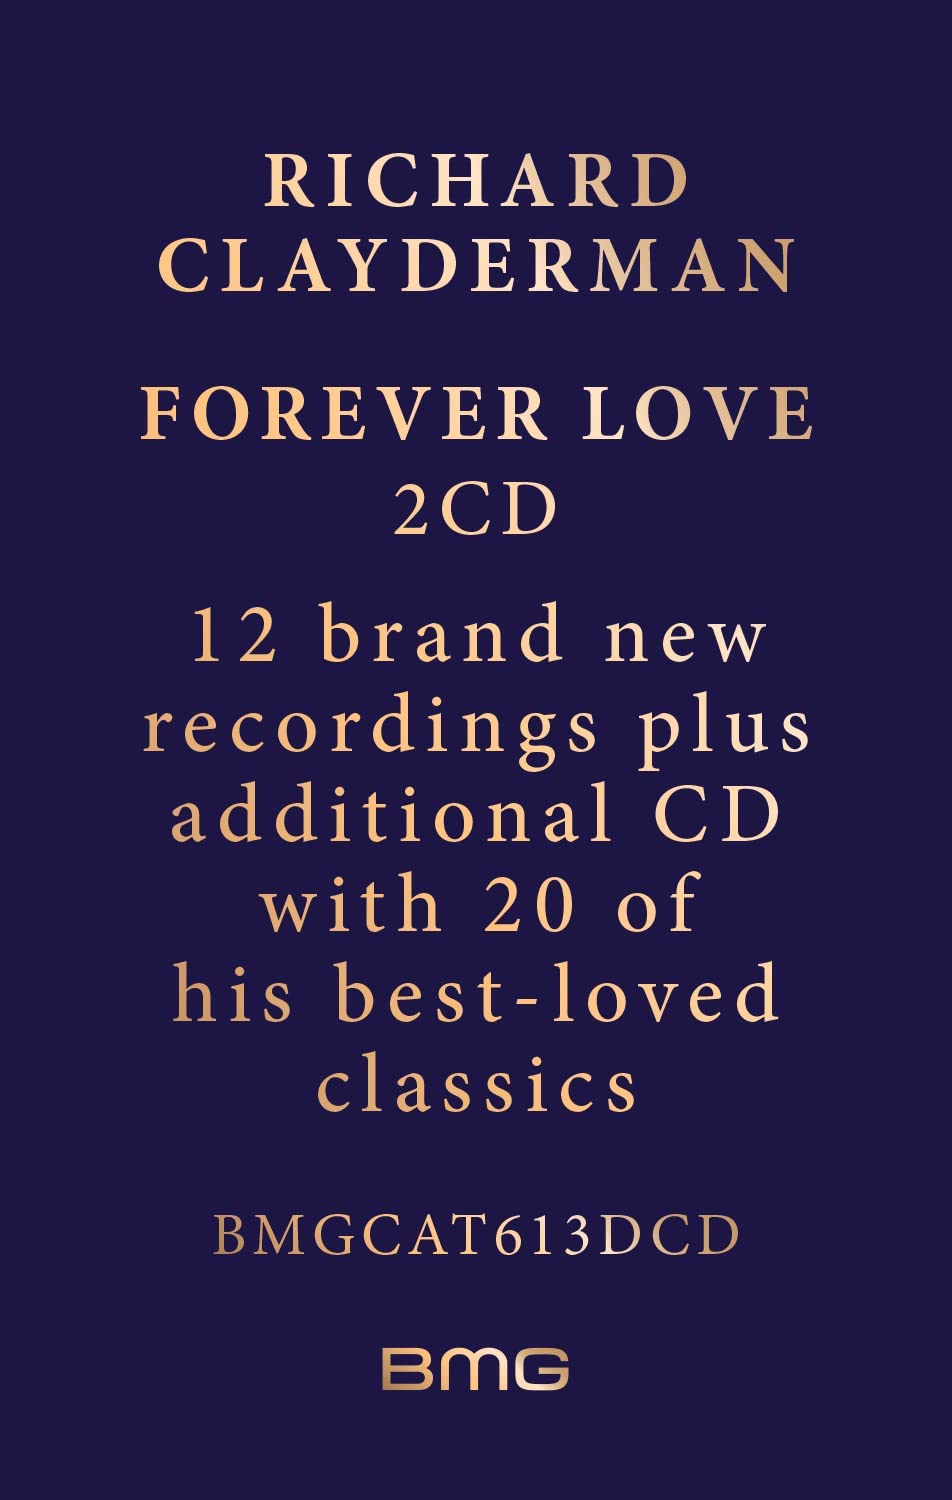 Richard Clayderman - Forever Love [Audio CD]